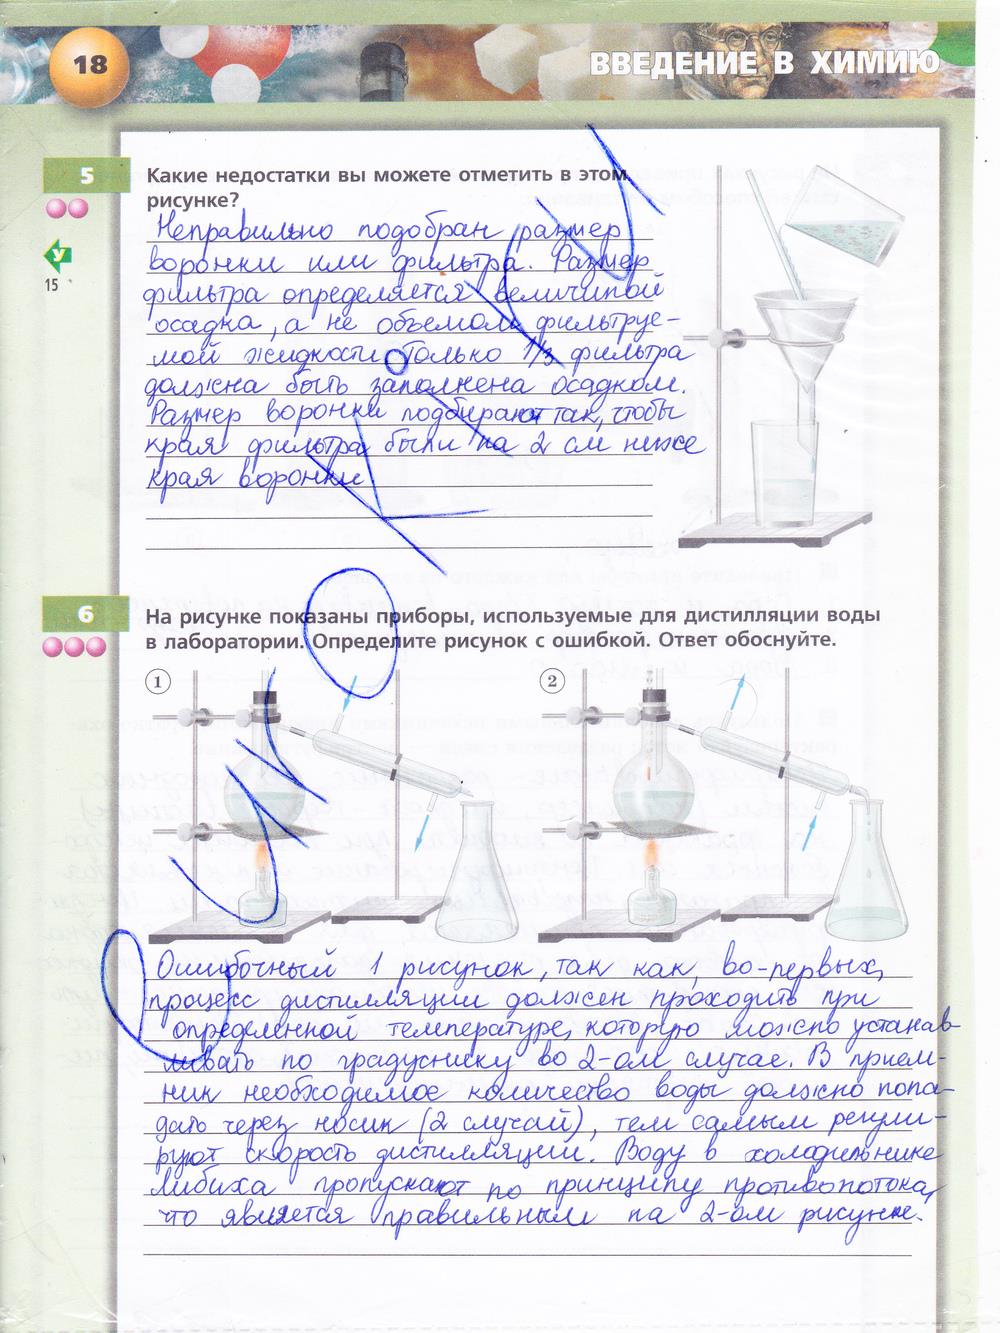 гдз 8 класс тетрадь-тренажёр страница 18 химия Гара